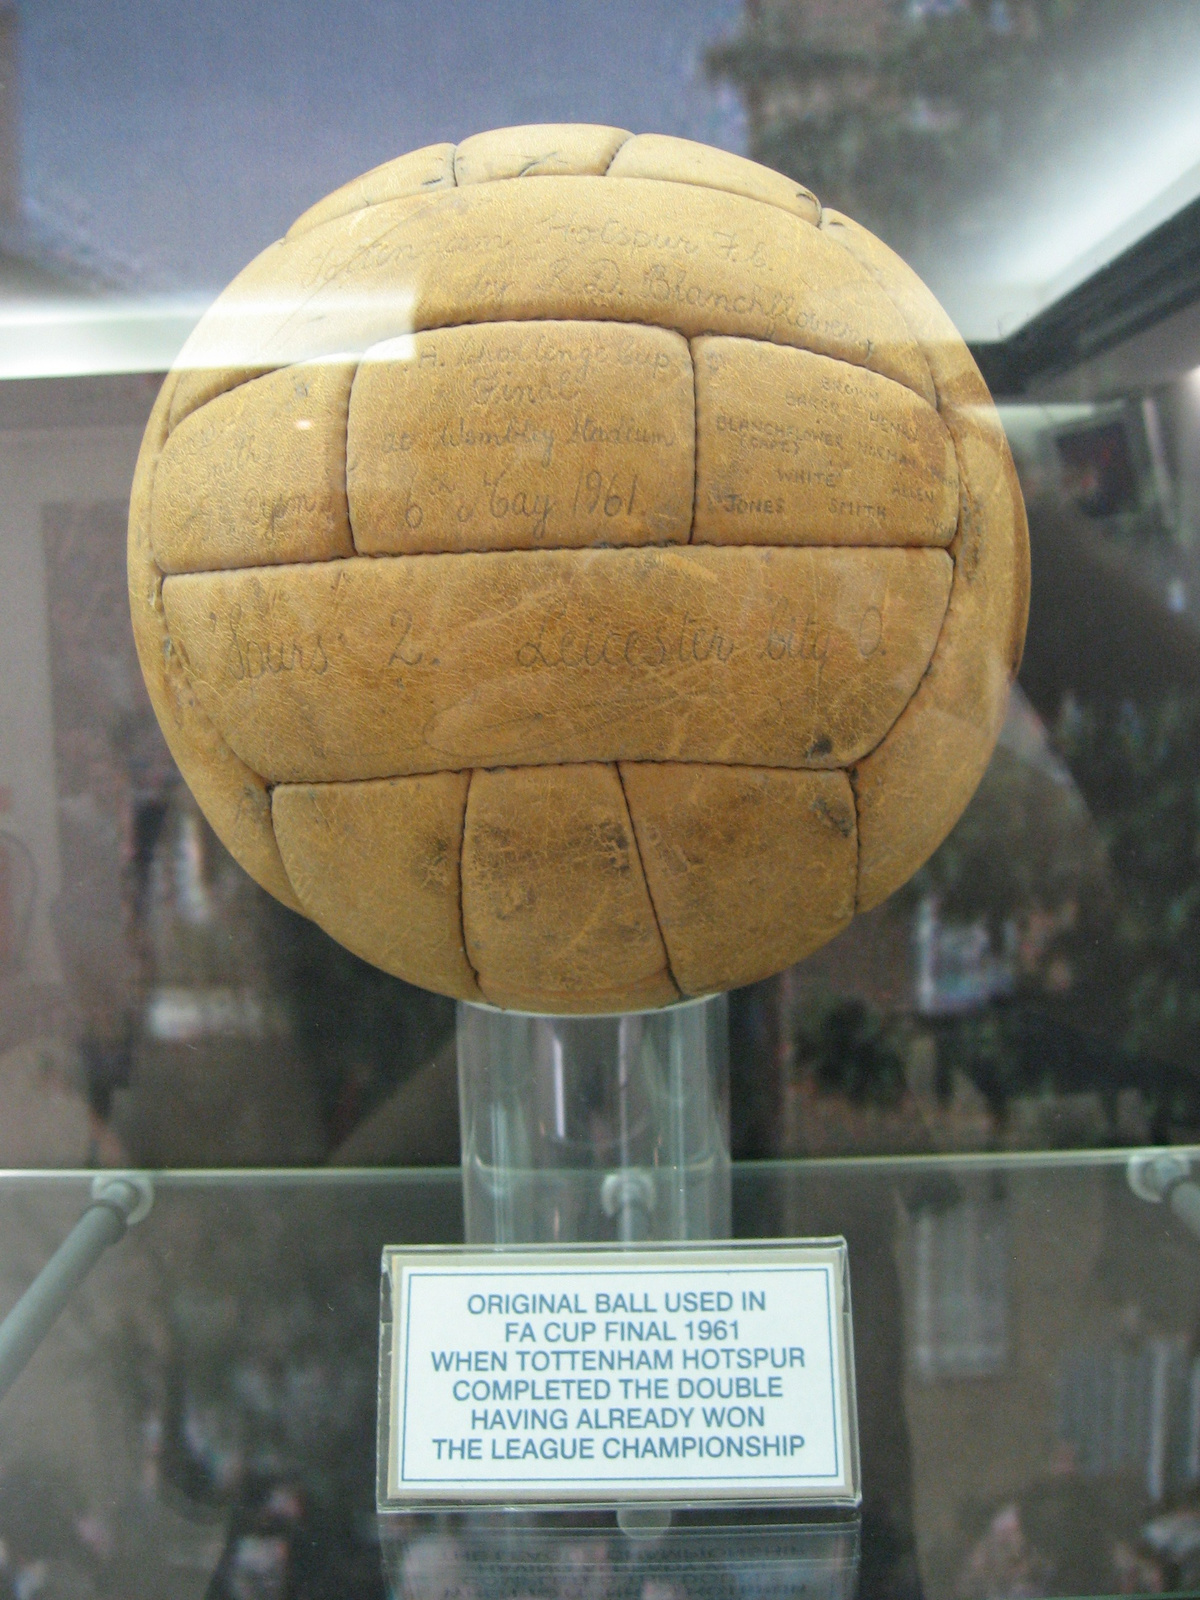 A Tottenham 1961-es labdája